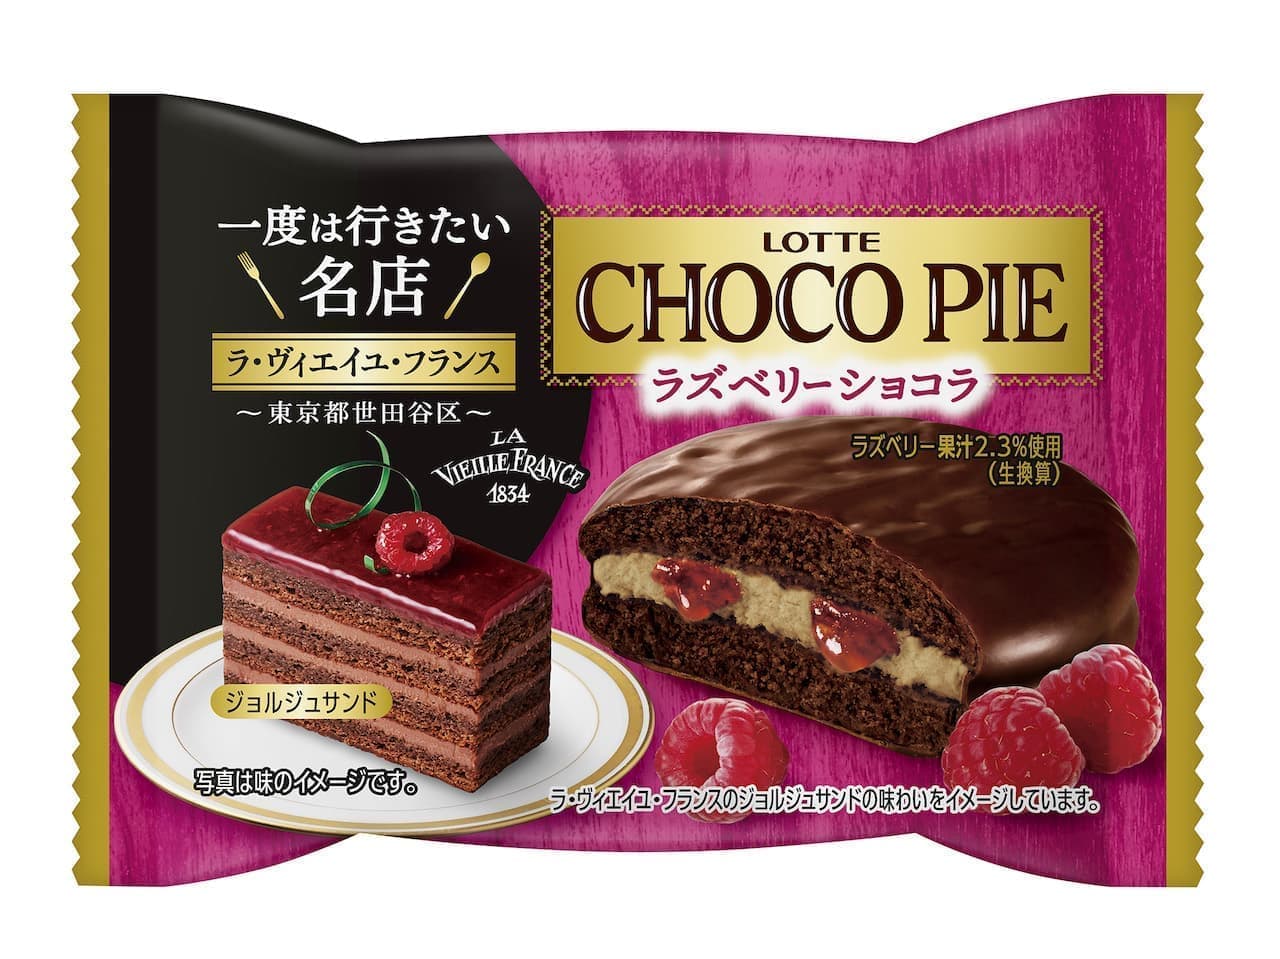 Lotte "Choco Pie [Raspberry Chocolat] sold individually